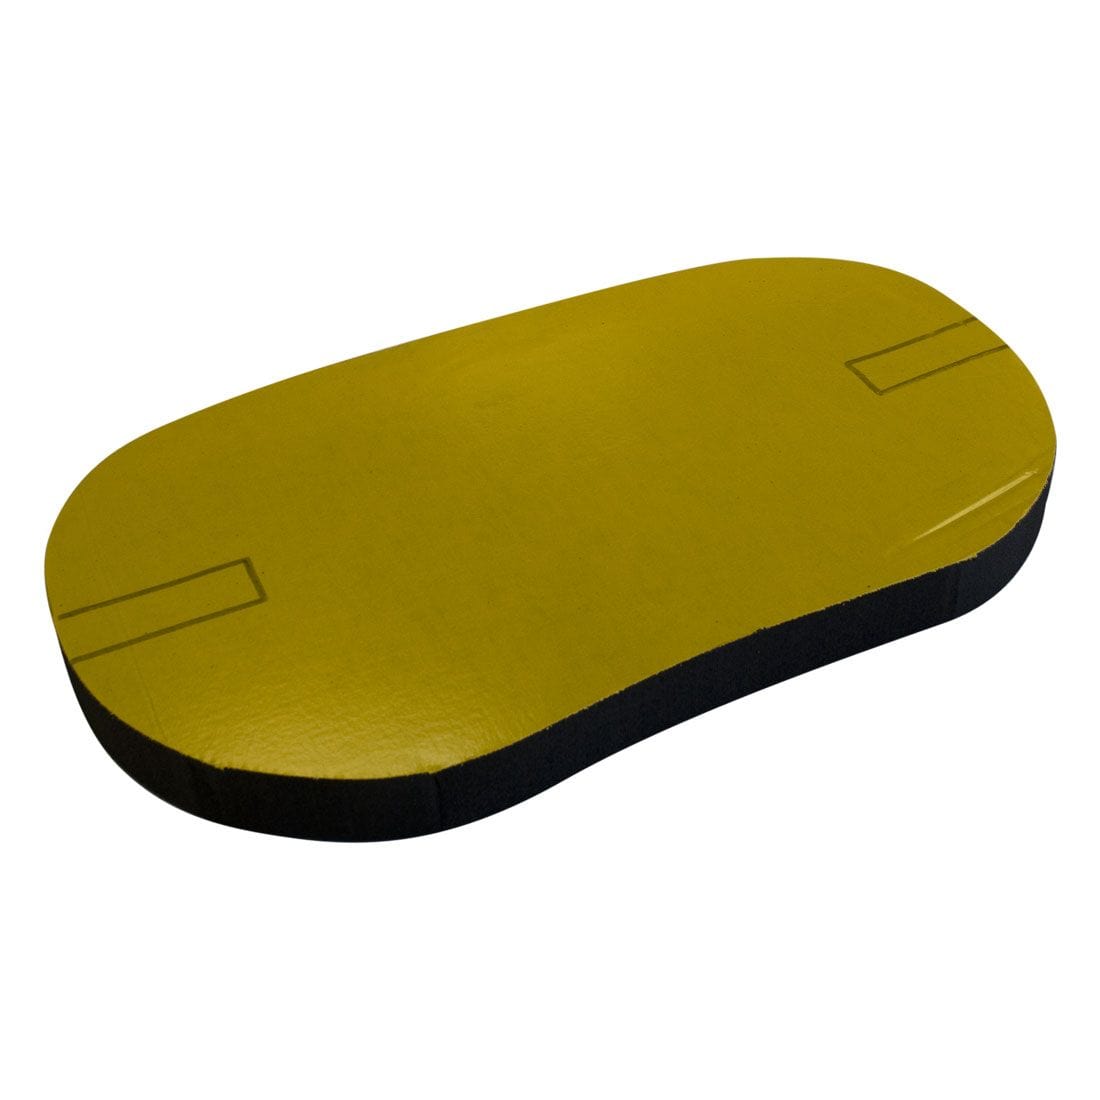 Pyranha Kayaks Self-Adhesive Foam Pad for Full Plate Footrest